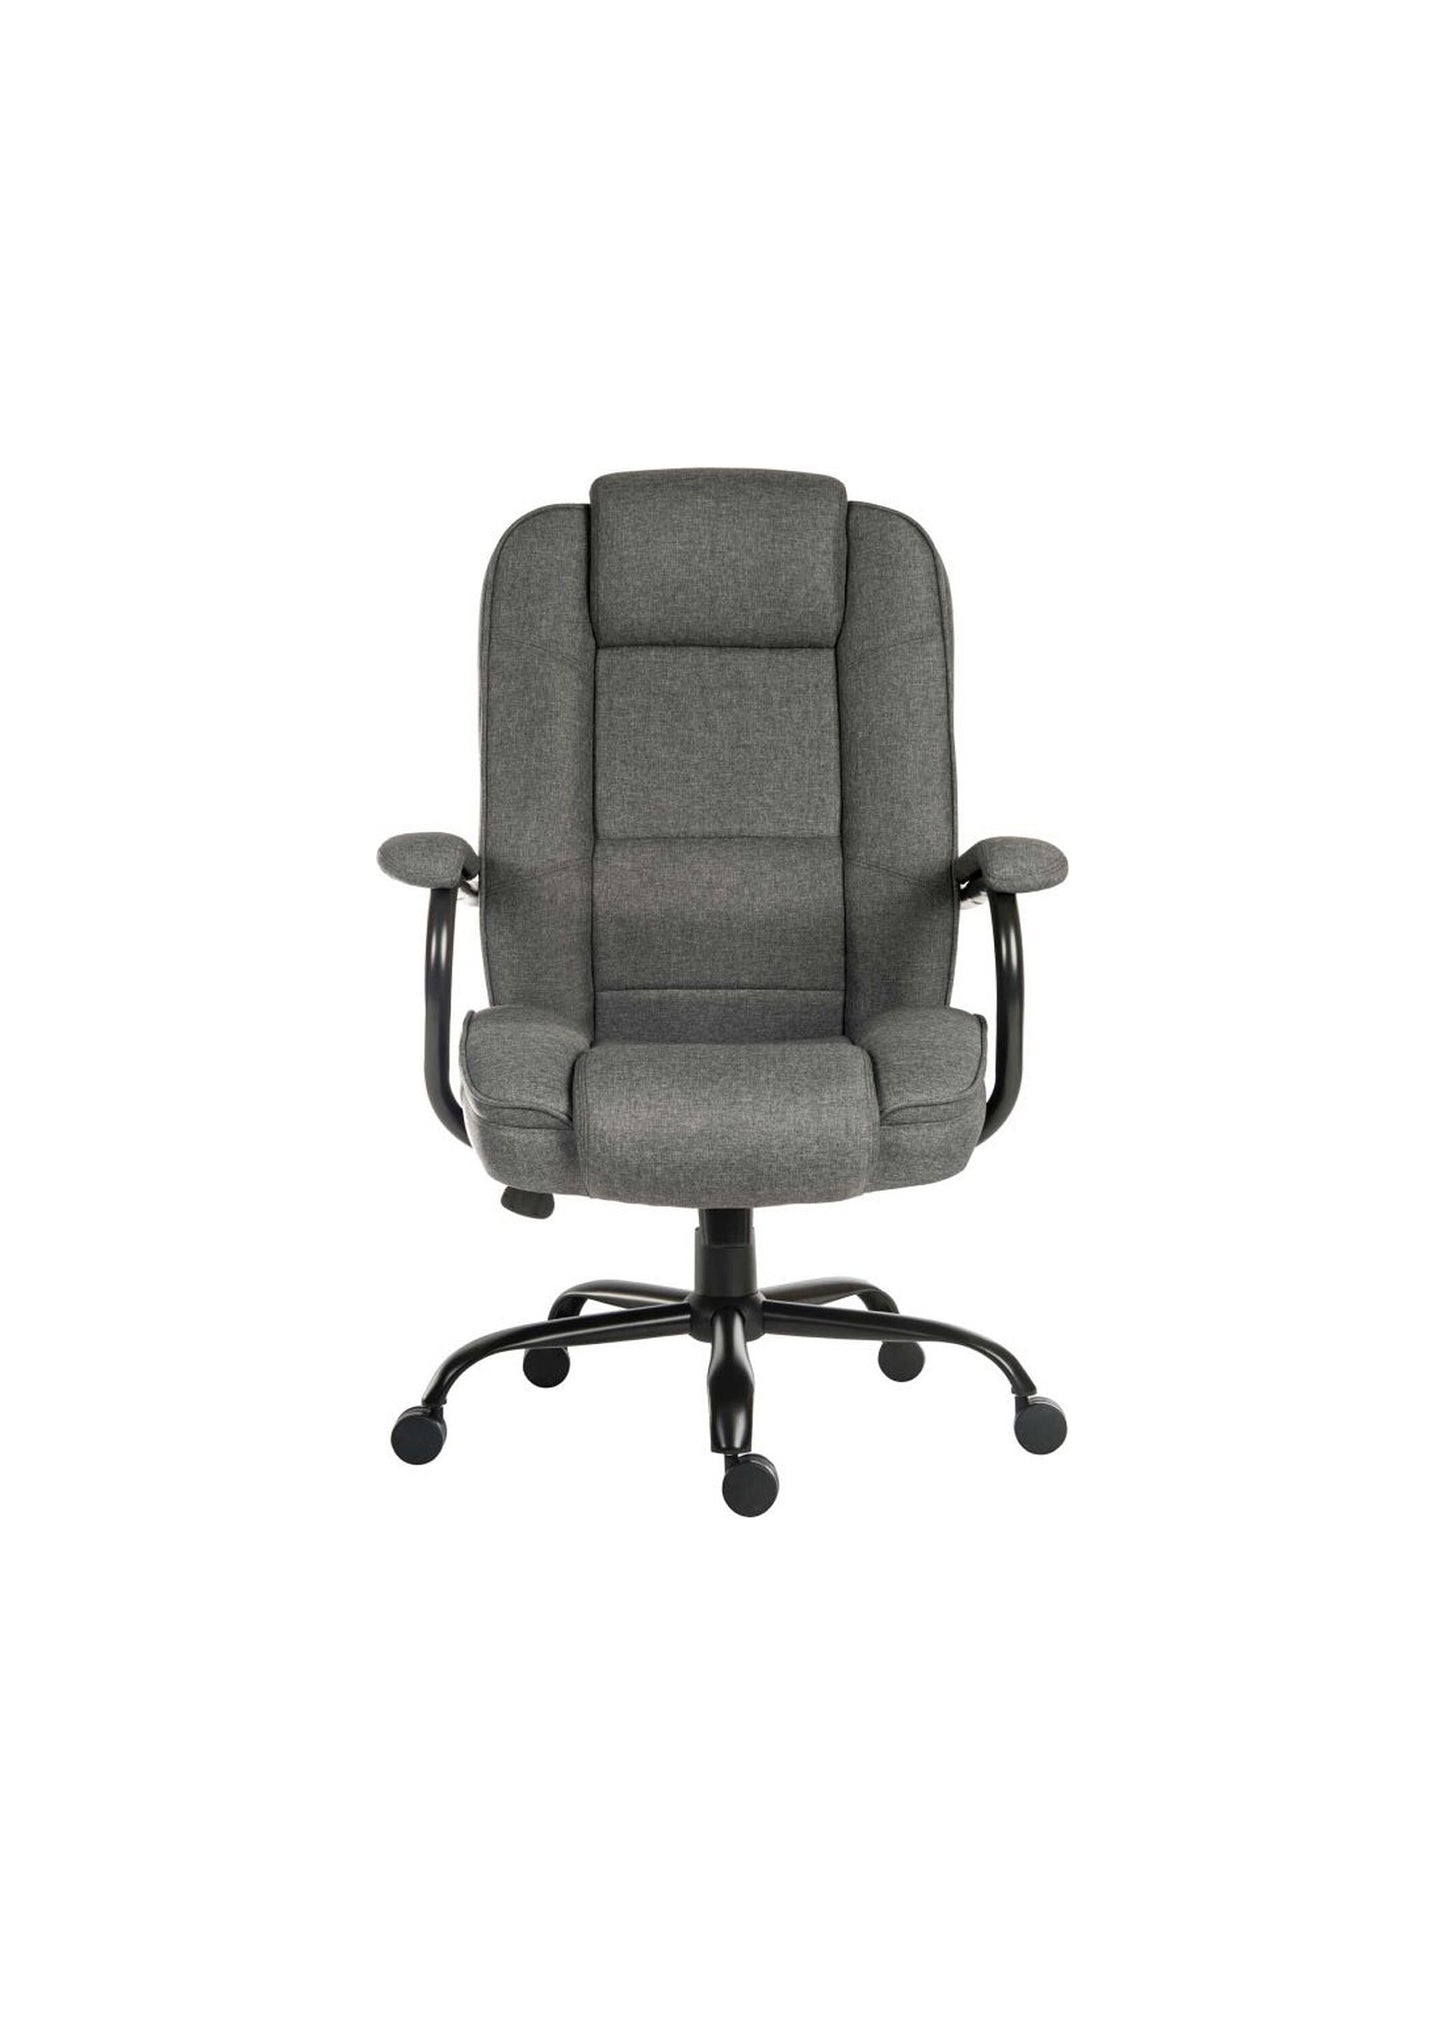 grey fabric office executive chair 